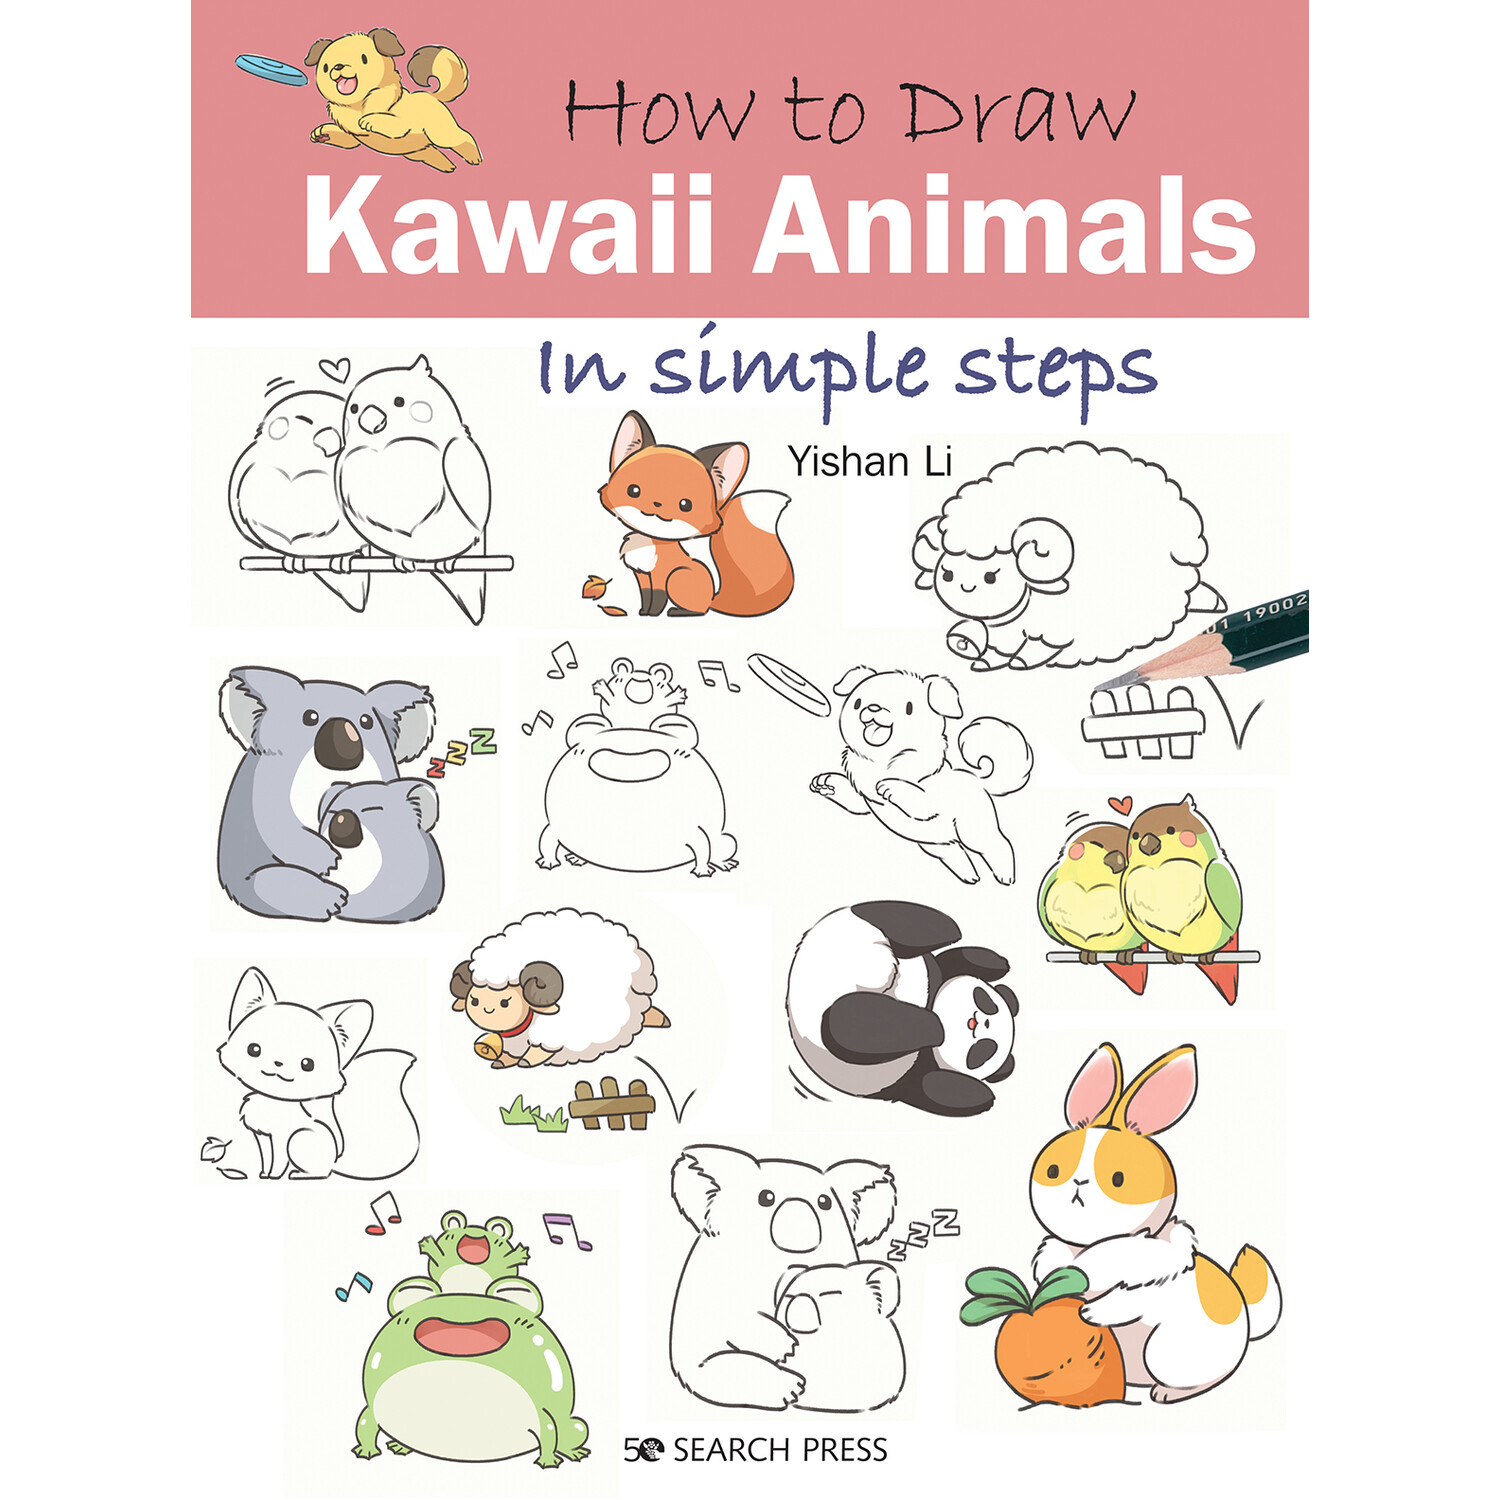 How To Draw Kawaii Animals Image 1